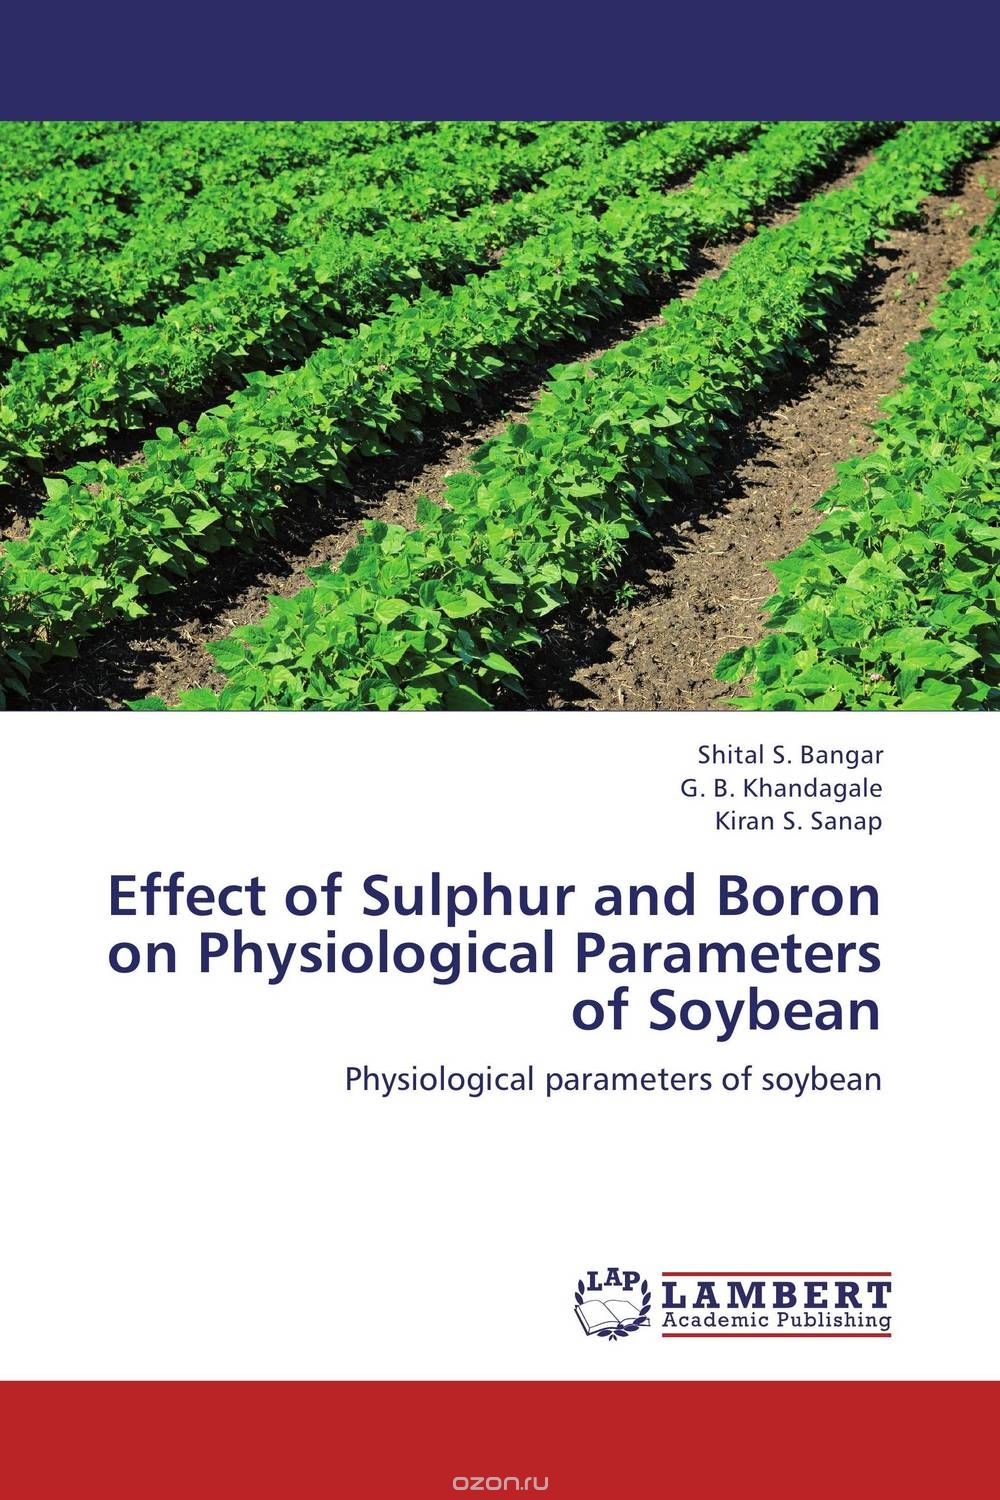 Скачать книгу "Effect of Sulphur and Boron on Physiological Parameters of Soybean"